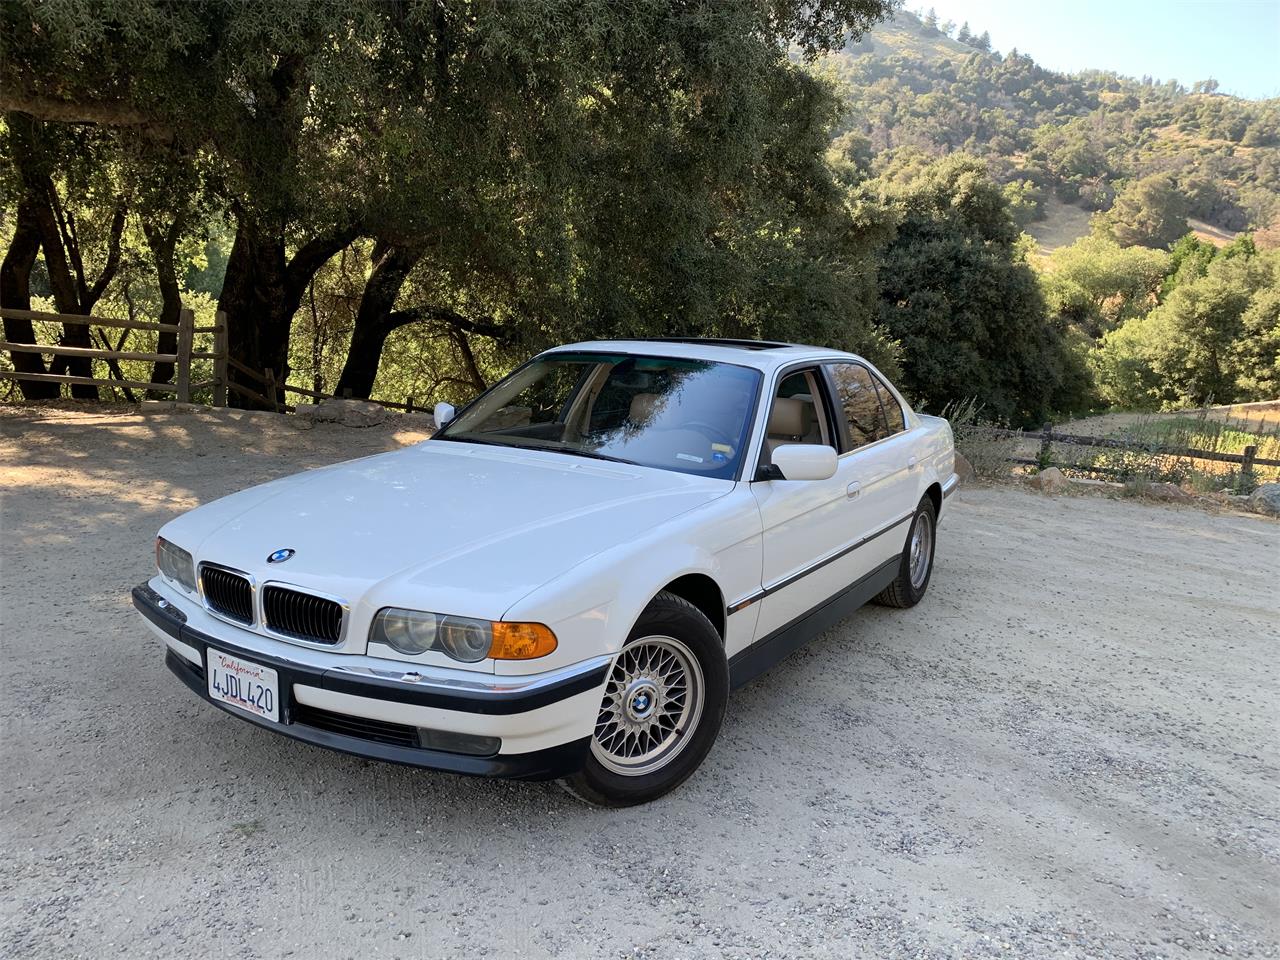 2000 BMW 740i for sale in Santa Ysabel, CA – photo 3